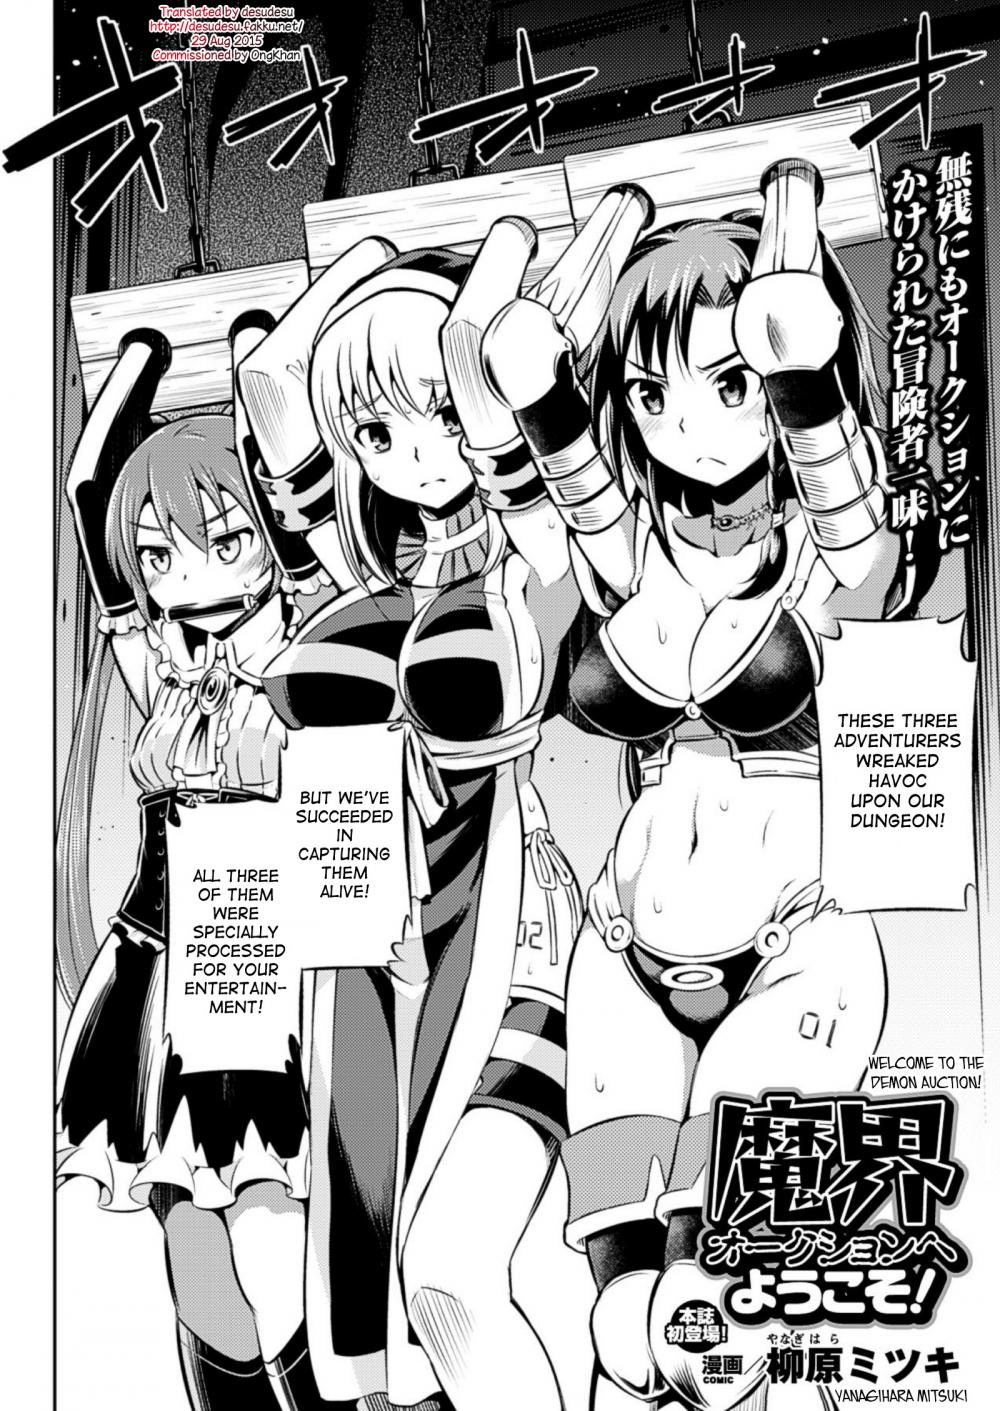 Hentai Manga Comic-Welcome to the Demon Auction-Read-2